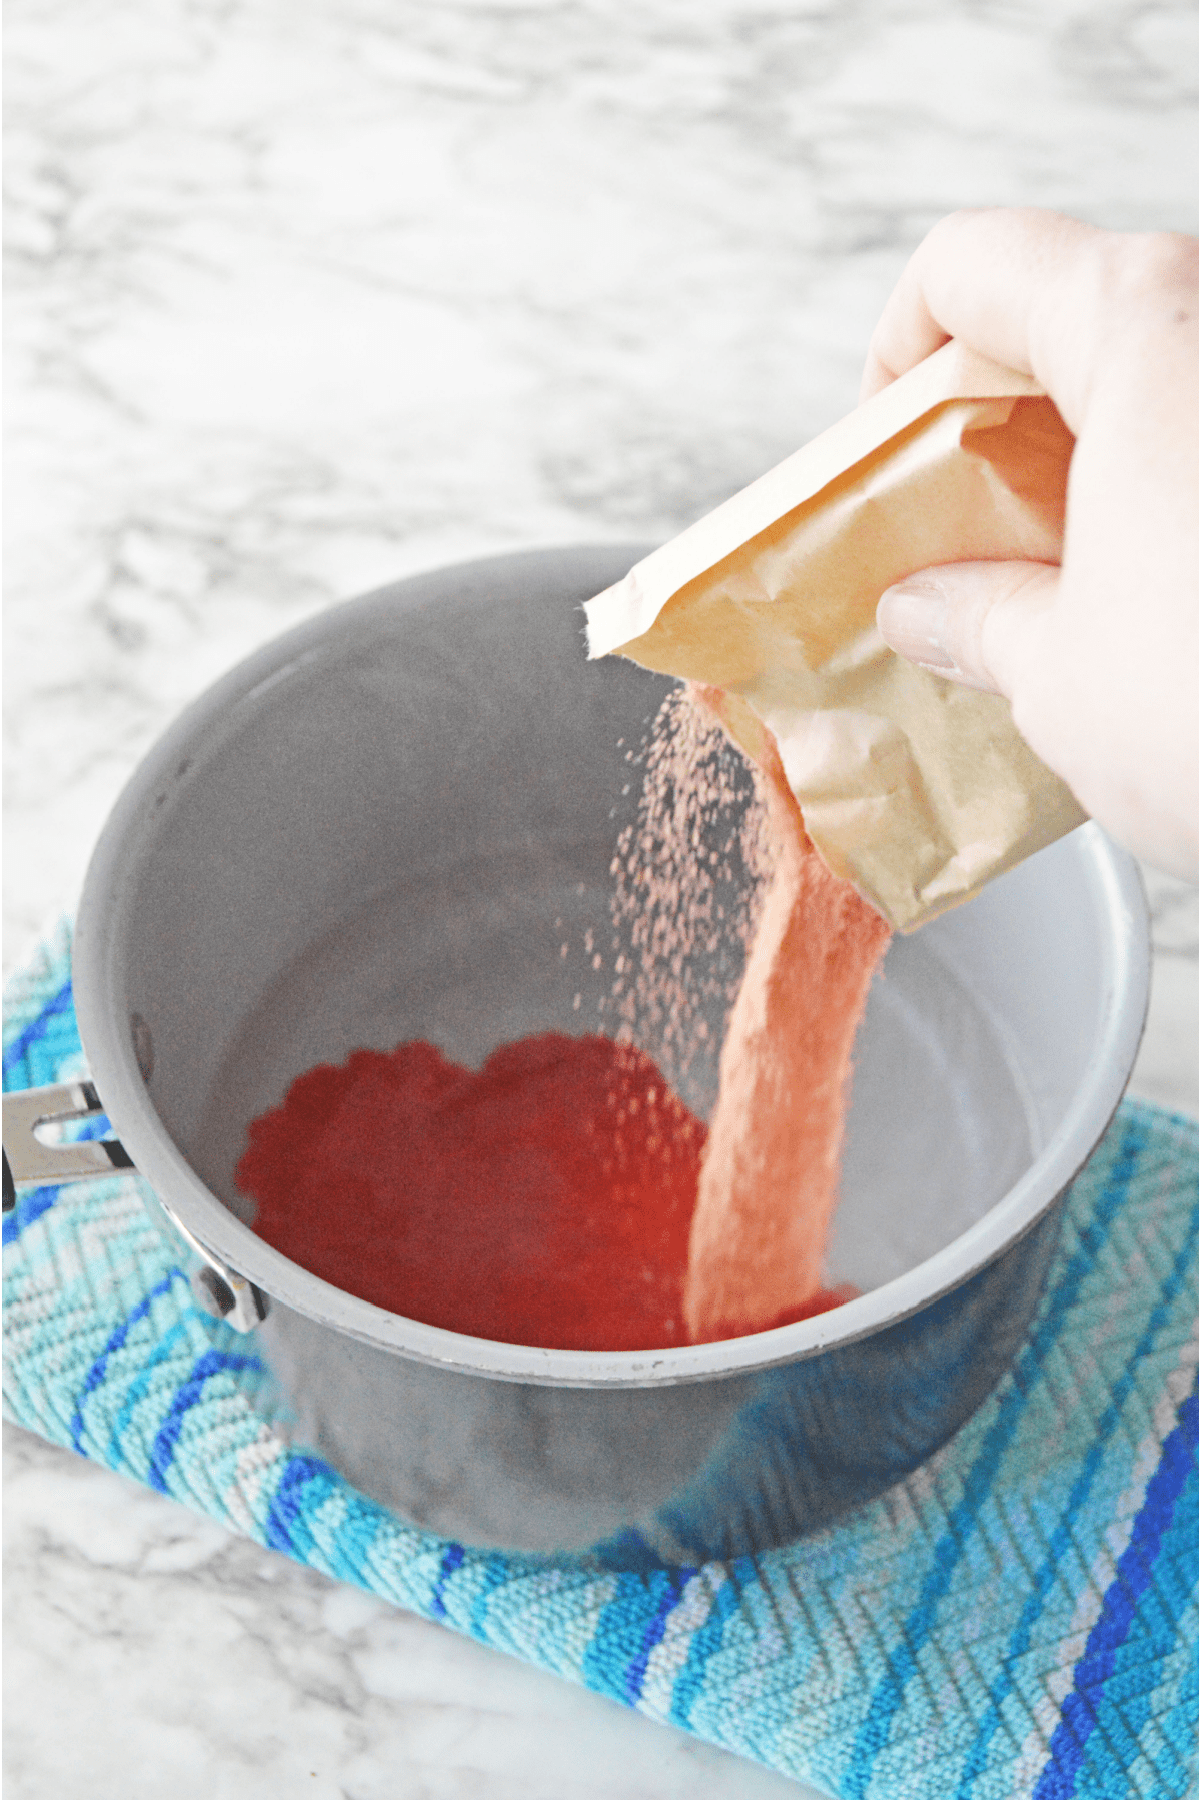 Red jello mix poured into saucepan